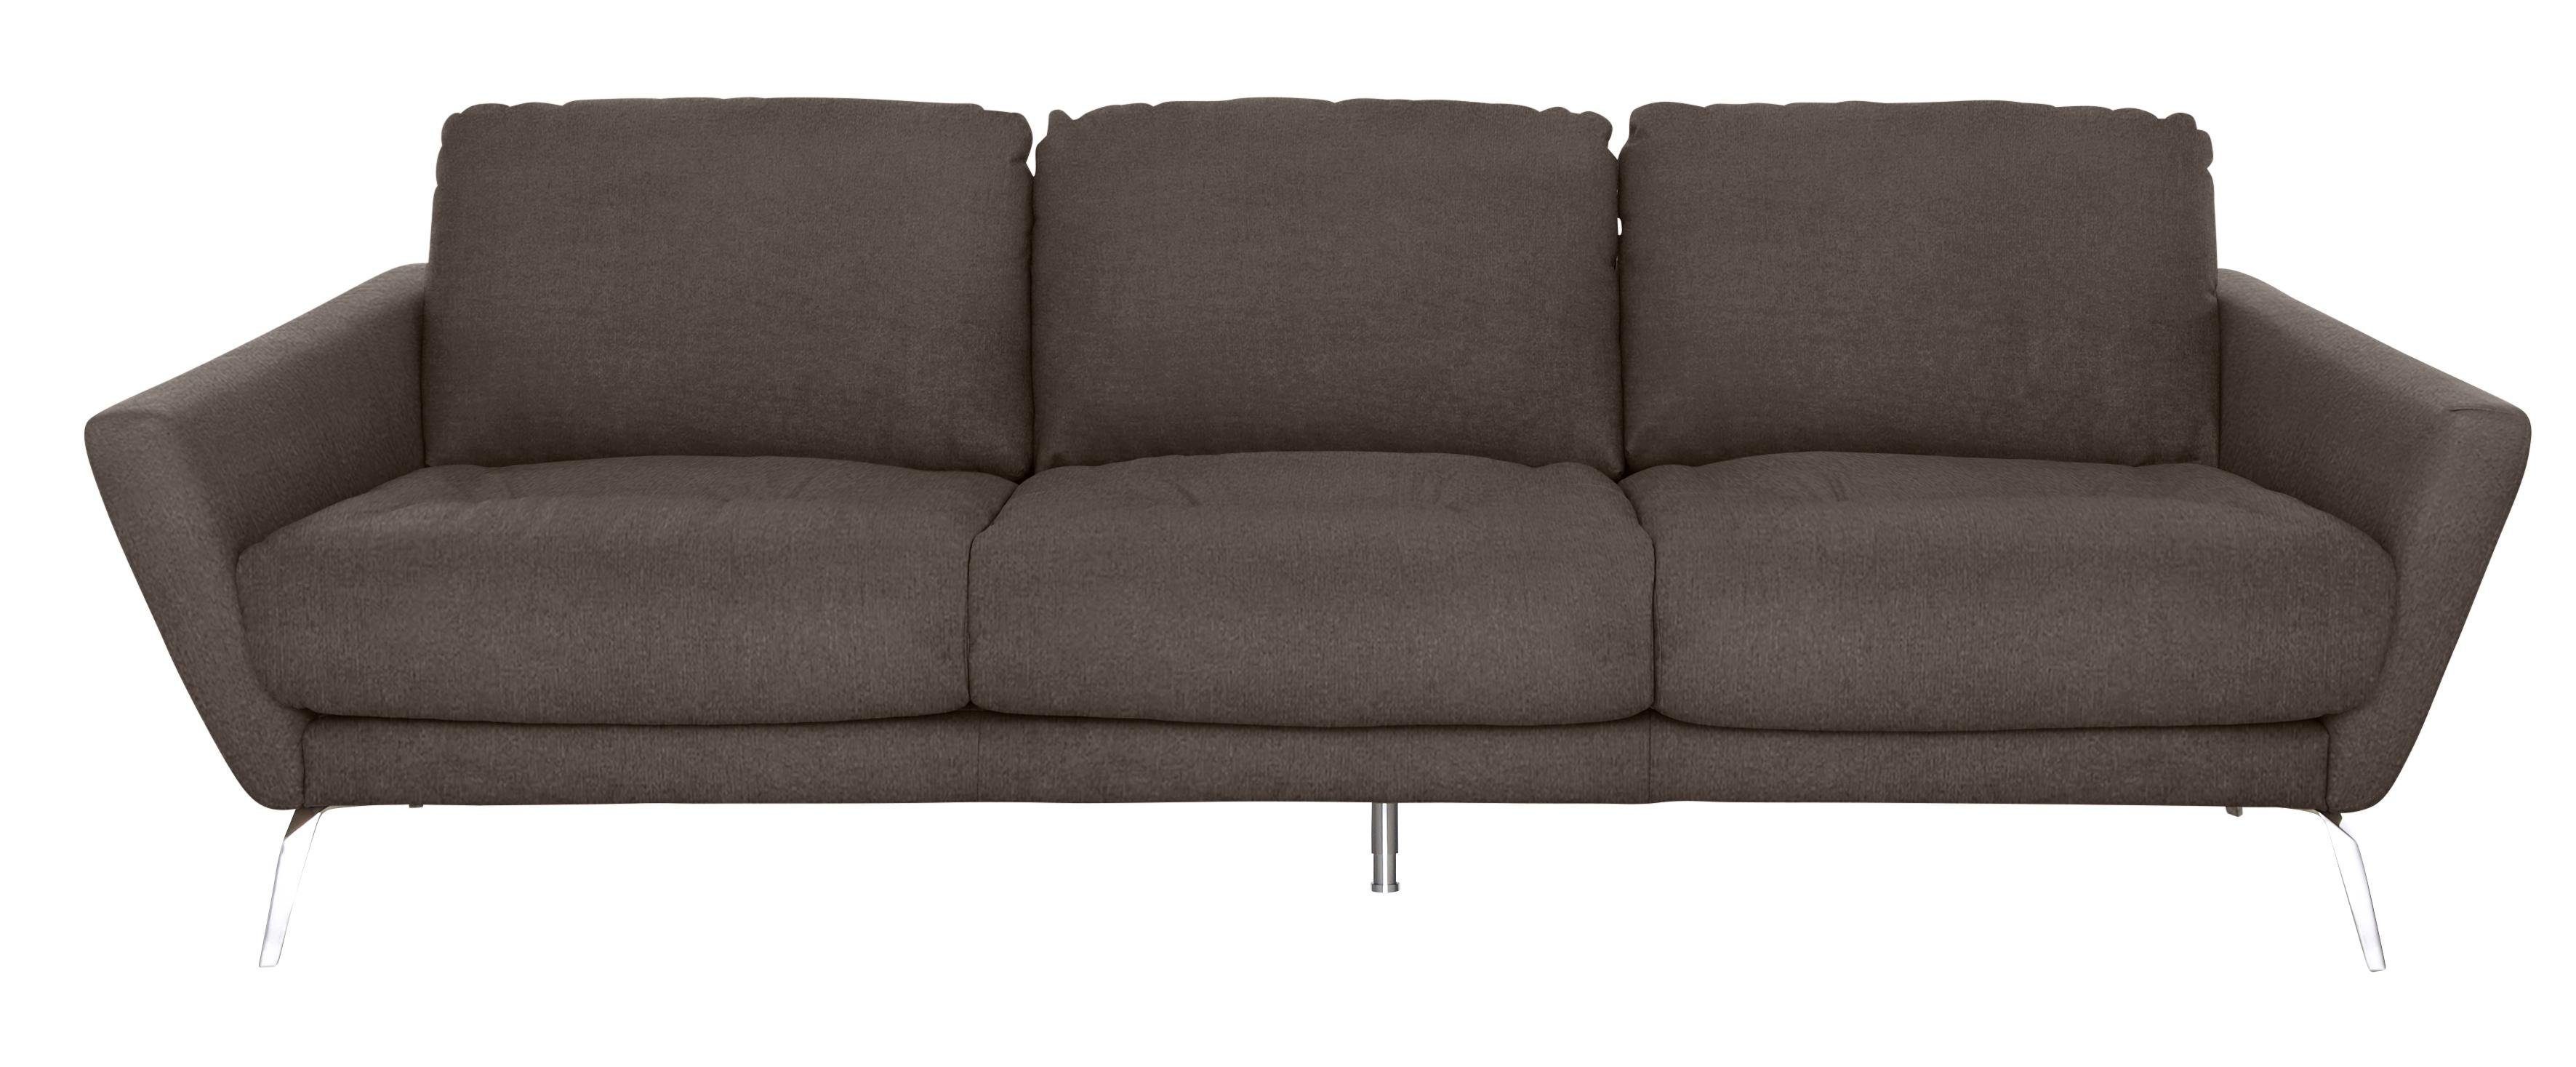 Chrom W.SCHILLIG im Füße Big-Sofa mit Sitz, glänzend dekorativer Heftung softy,